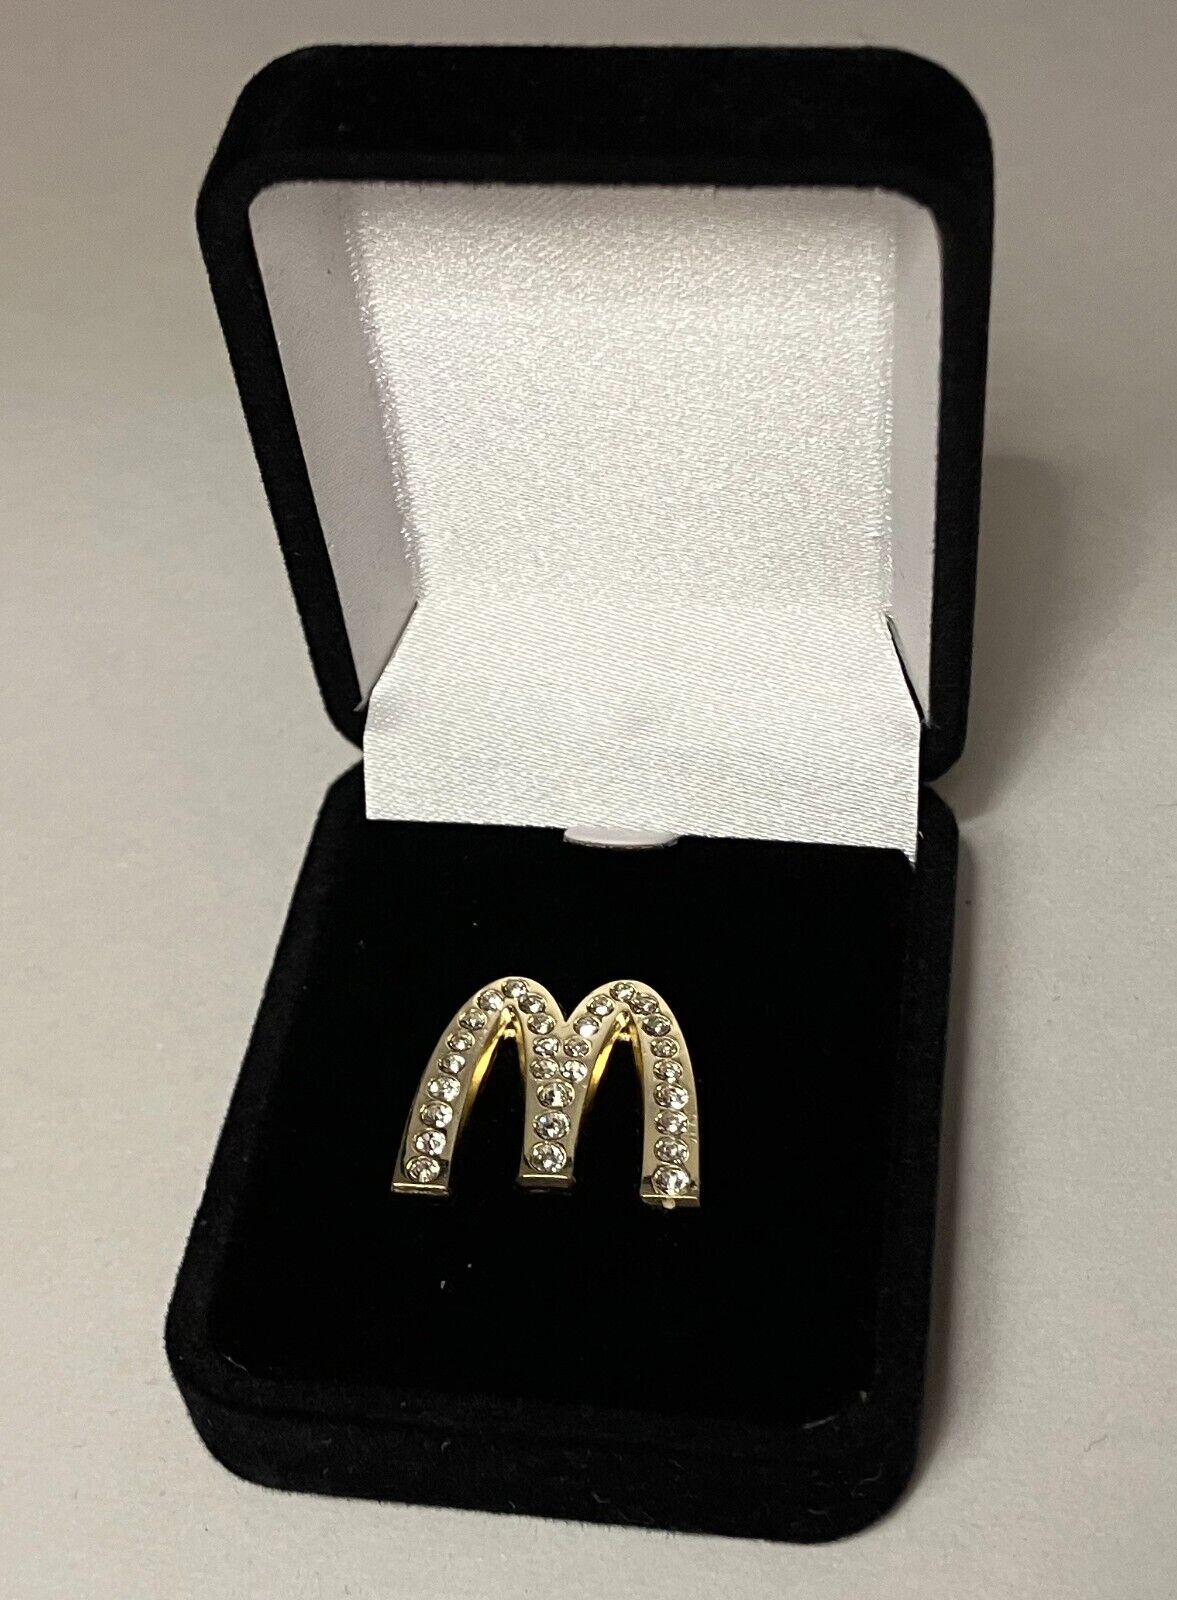 McDonalds Swarovski Crystals Golden Arches Logo Lapel Pin